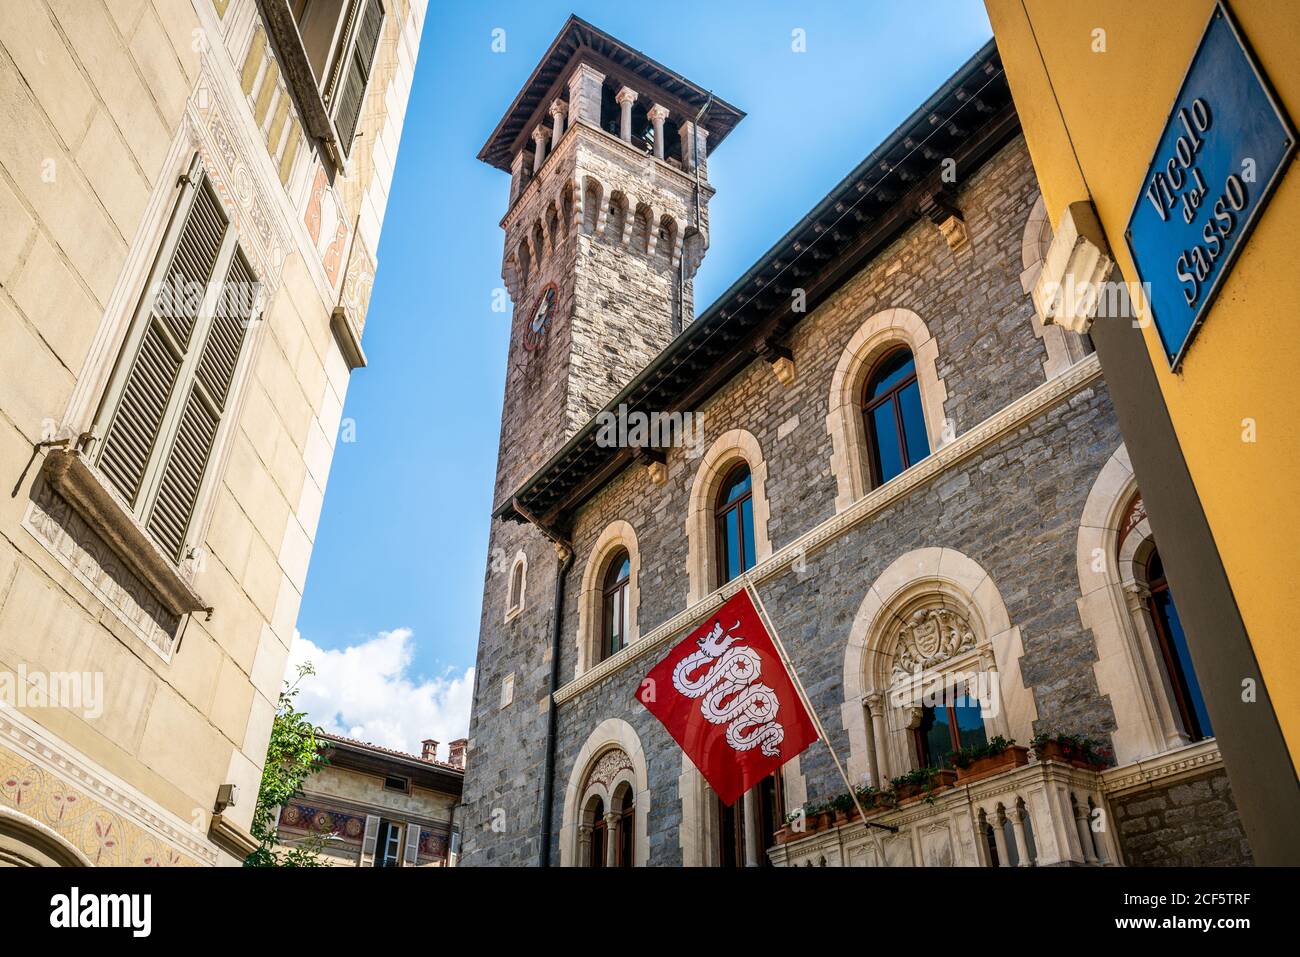 Exterior view of Bellinzona city hall and city flag with clock tower in Bellinzona Ticino Switzerland Stock Photo